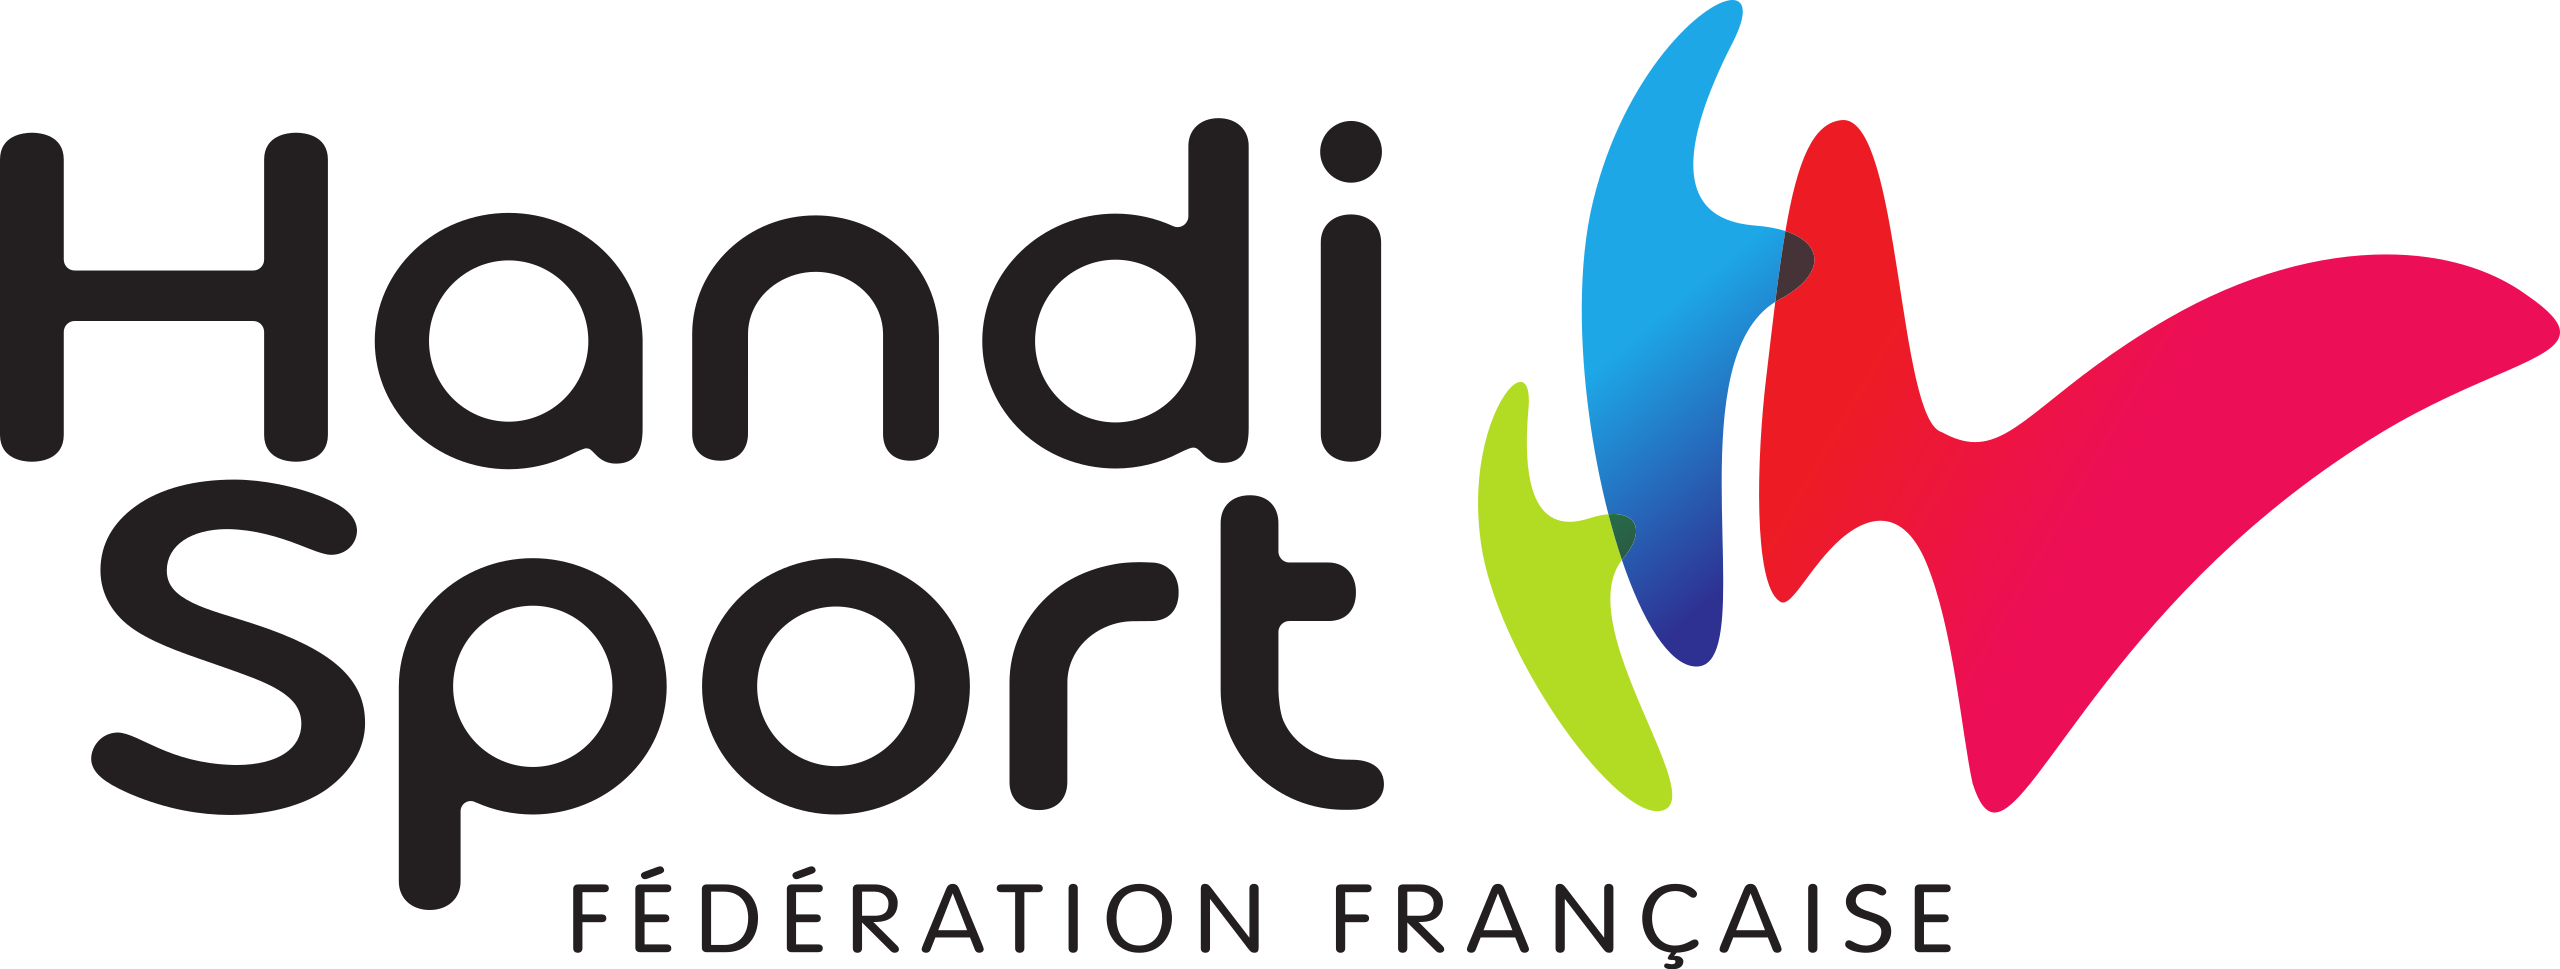 Fédération Handisport